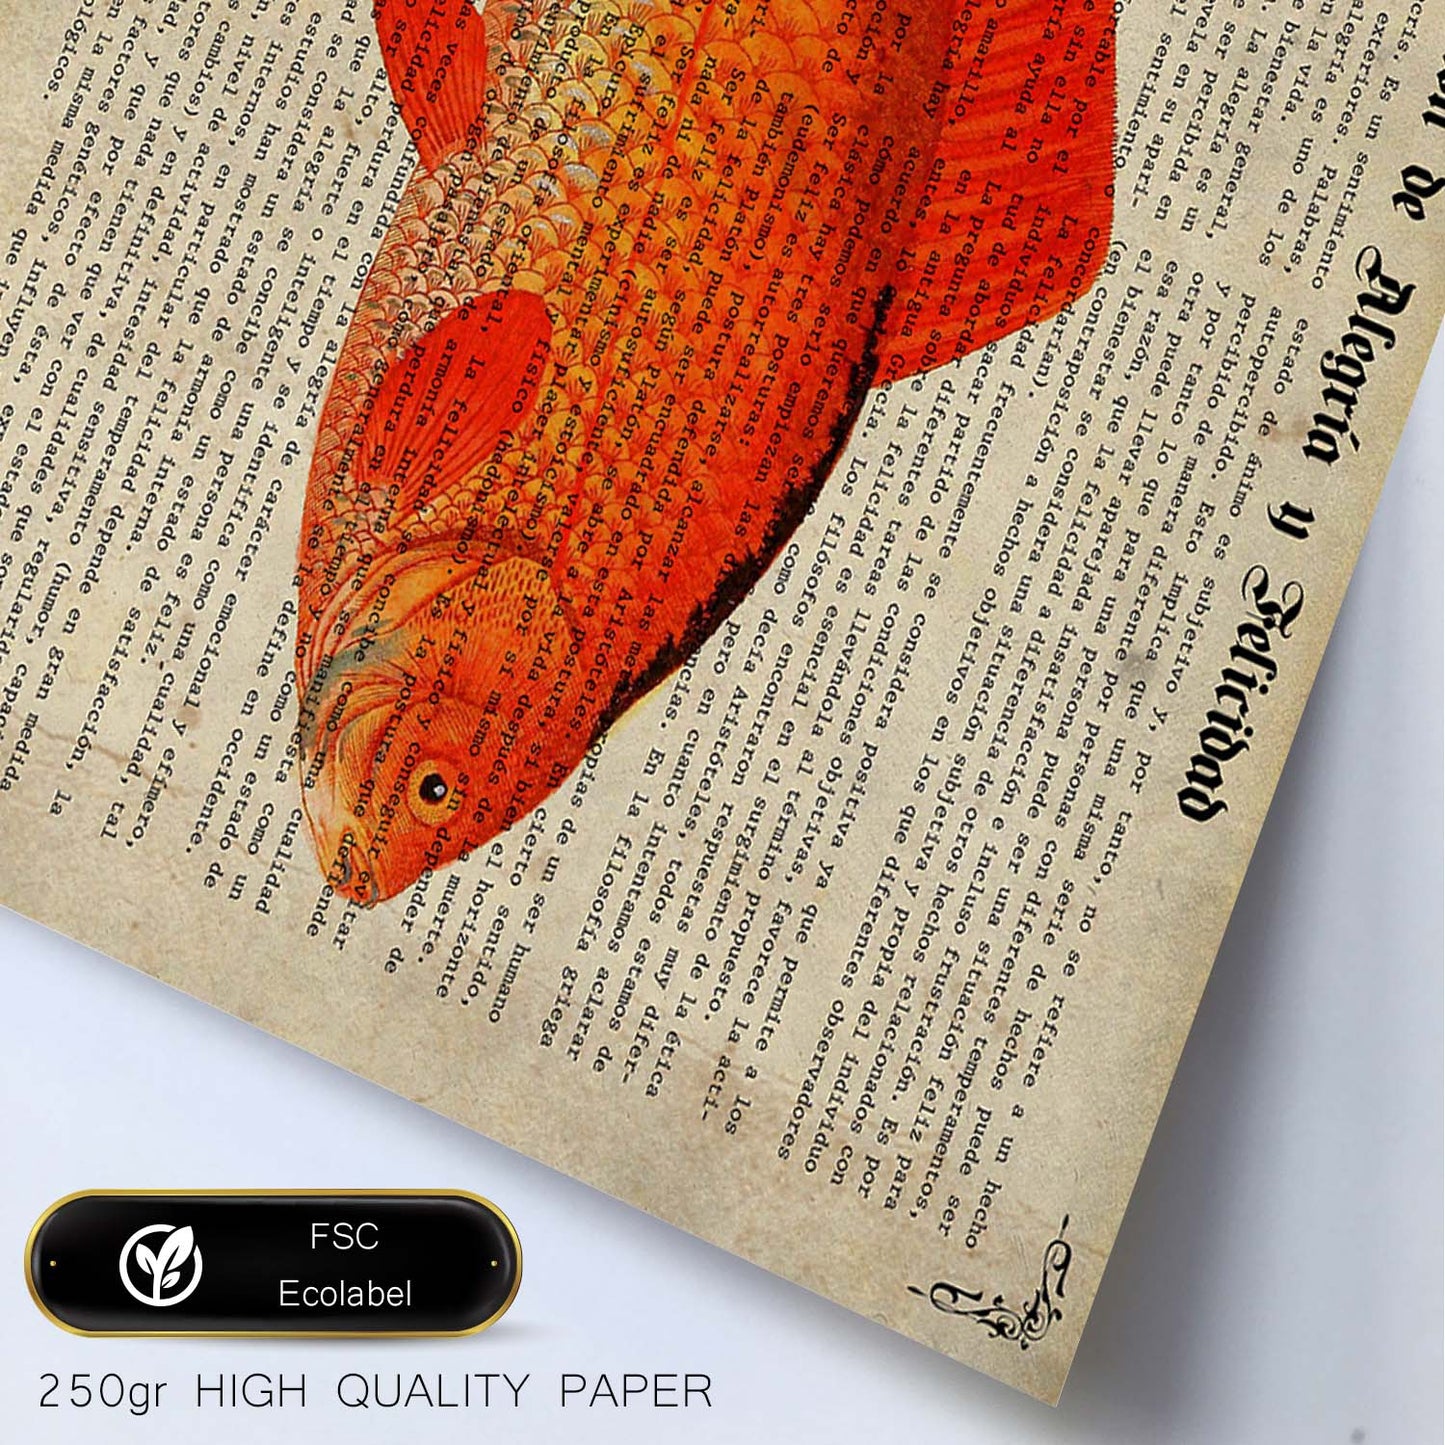 Poster de peces marinos. Lámina de Carpa con definicion. Diseño de peces marinos con definiciones.-Artwork-Nacnic-Nacnic Estudio SL